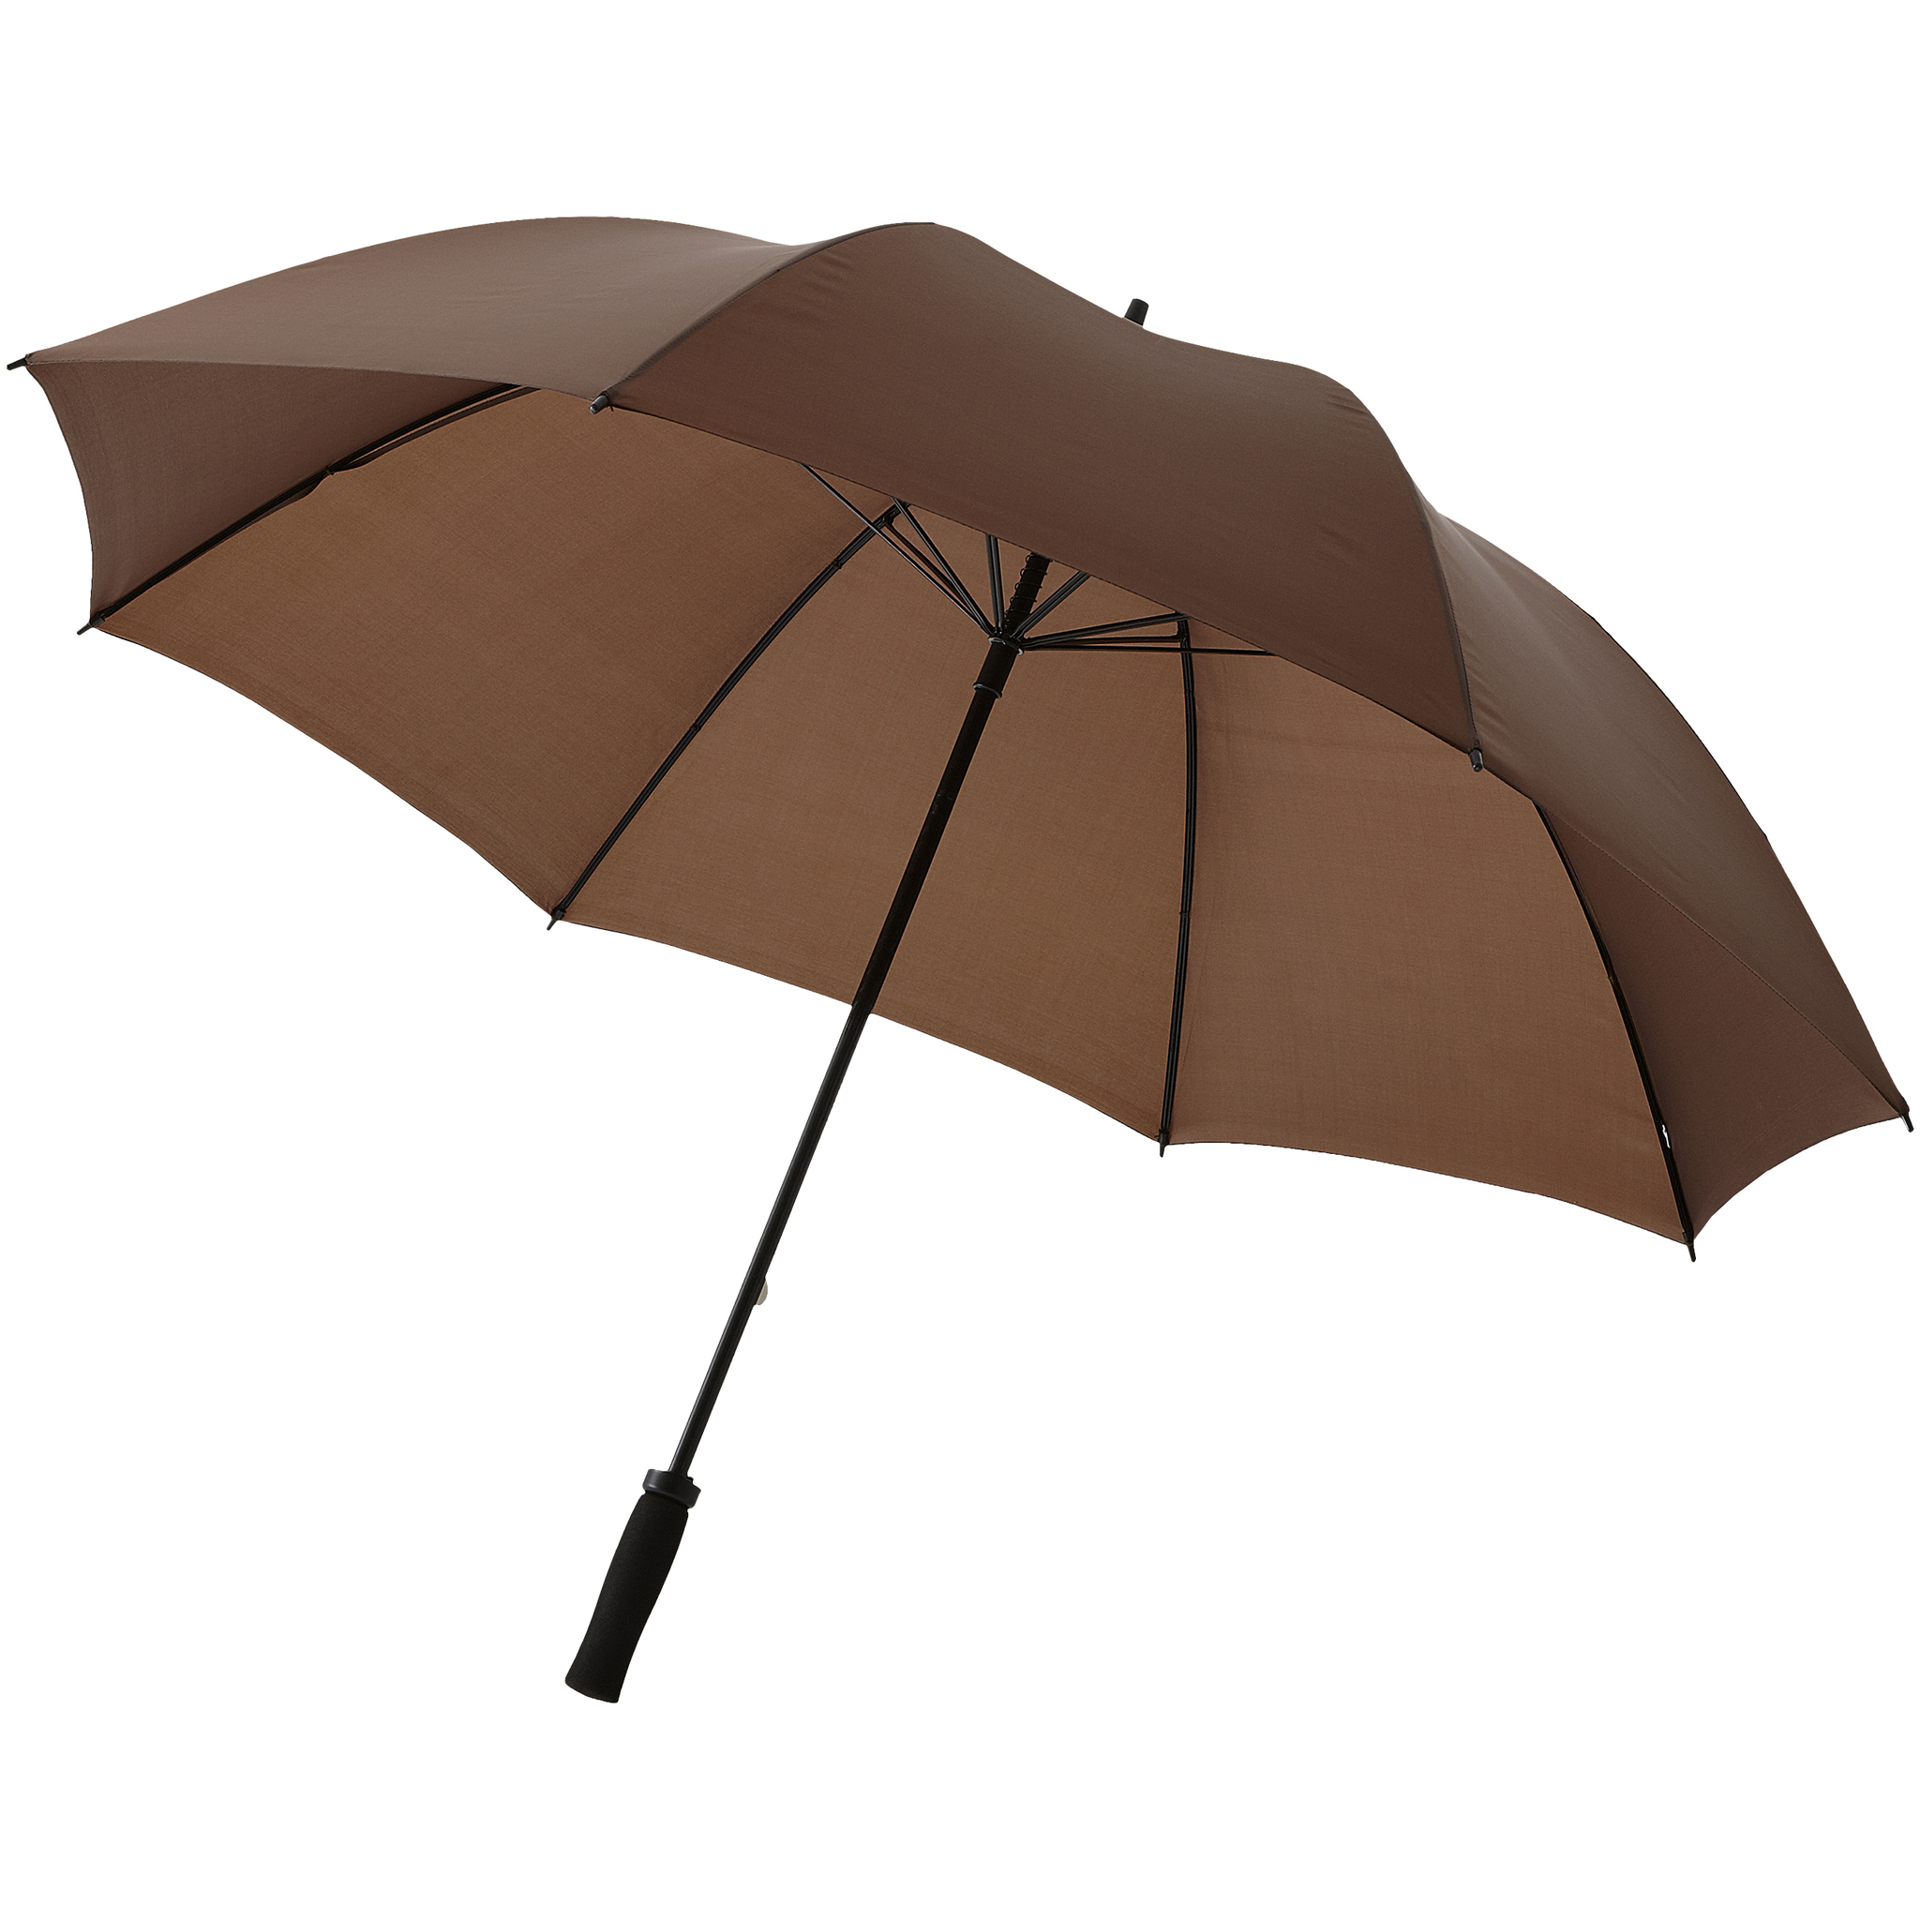 Storm Umbrella in brown